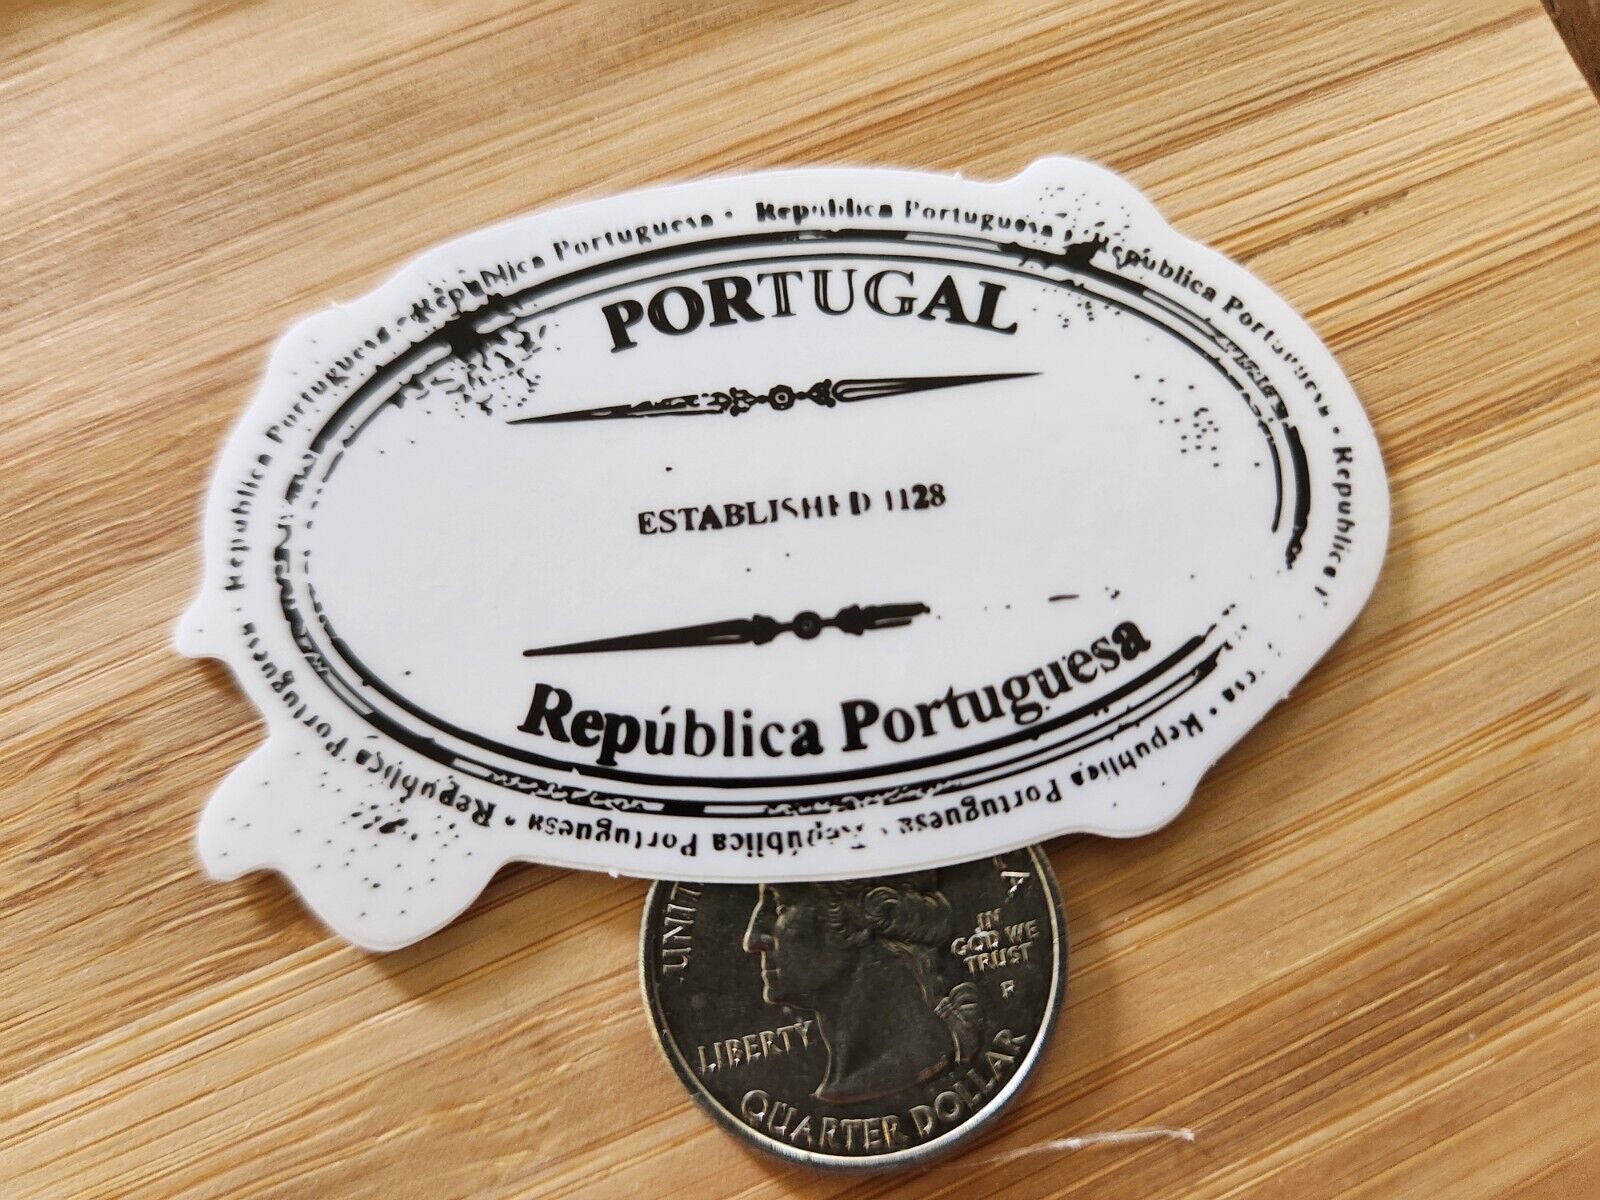 PORTUGAL Sticker Customs Sticker Customs Decal Travel Sticker Laptop Sticker 